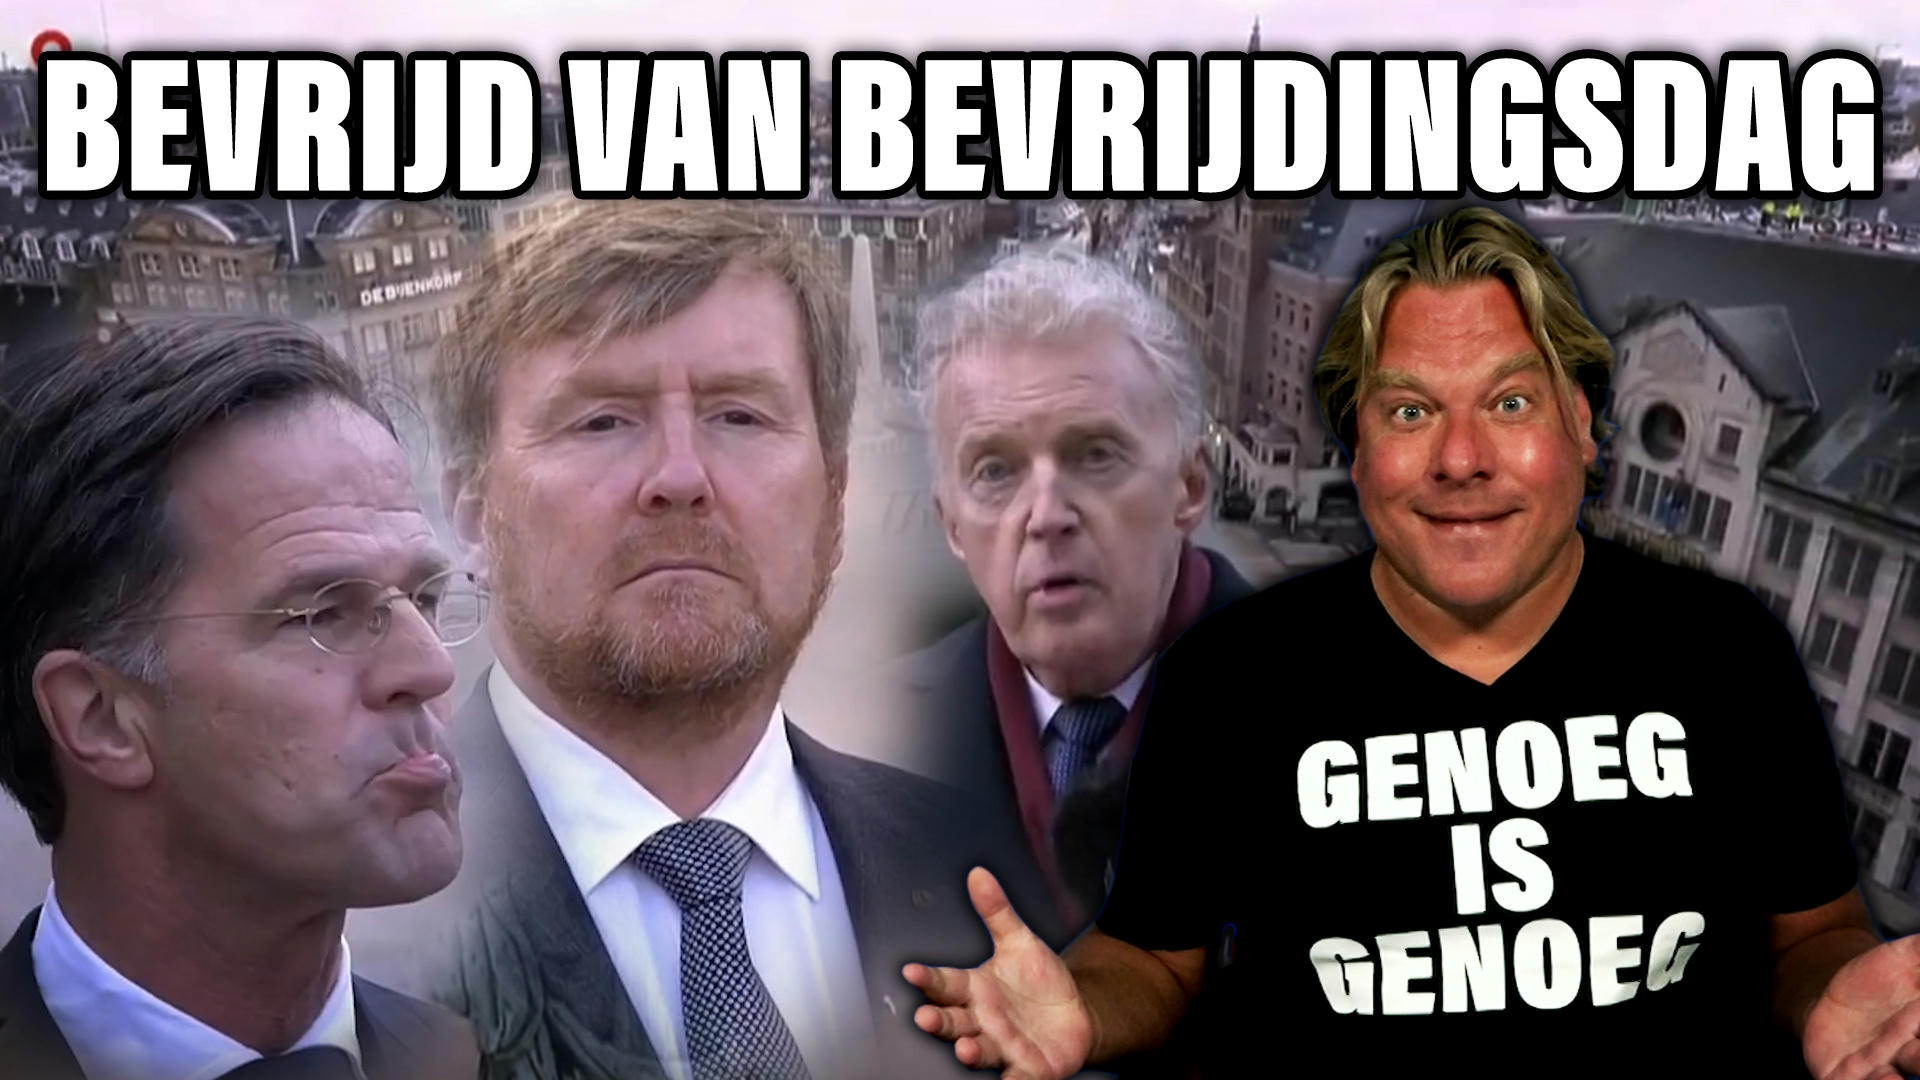 jensen.nl